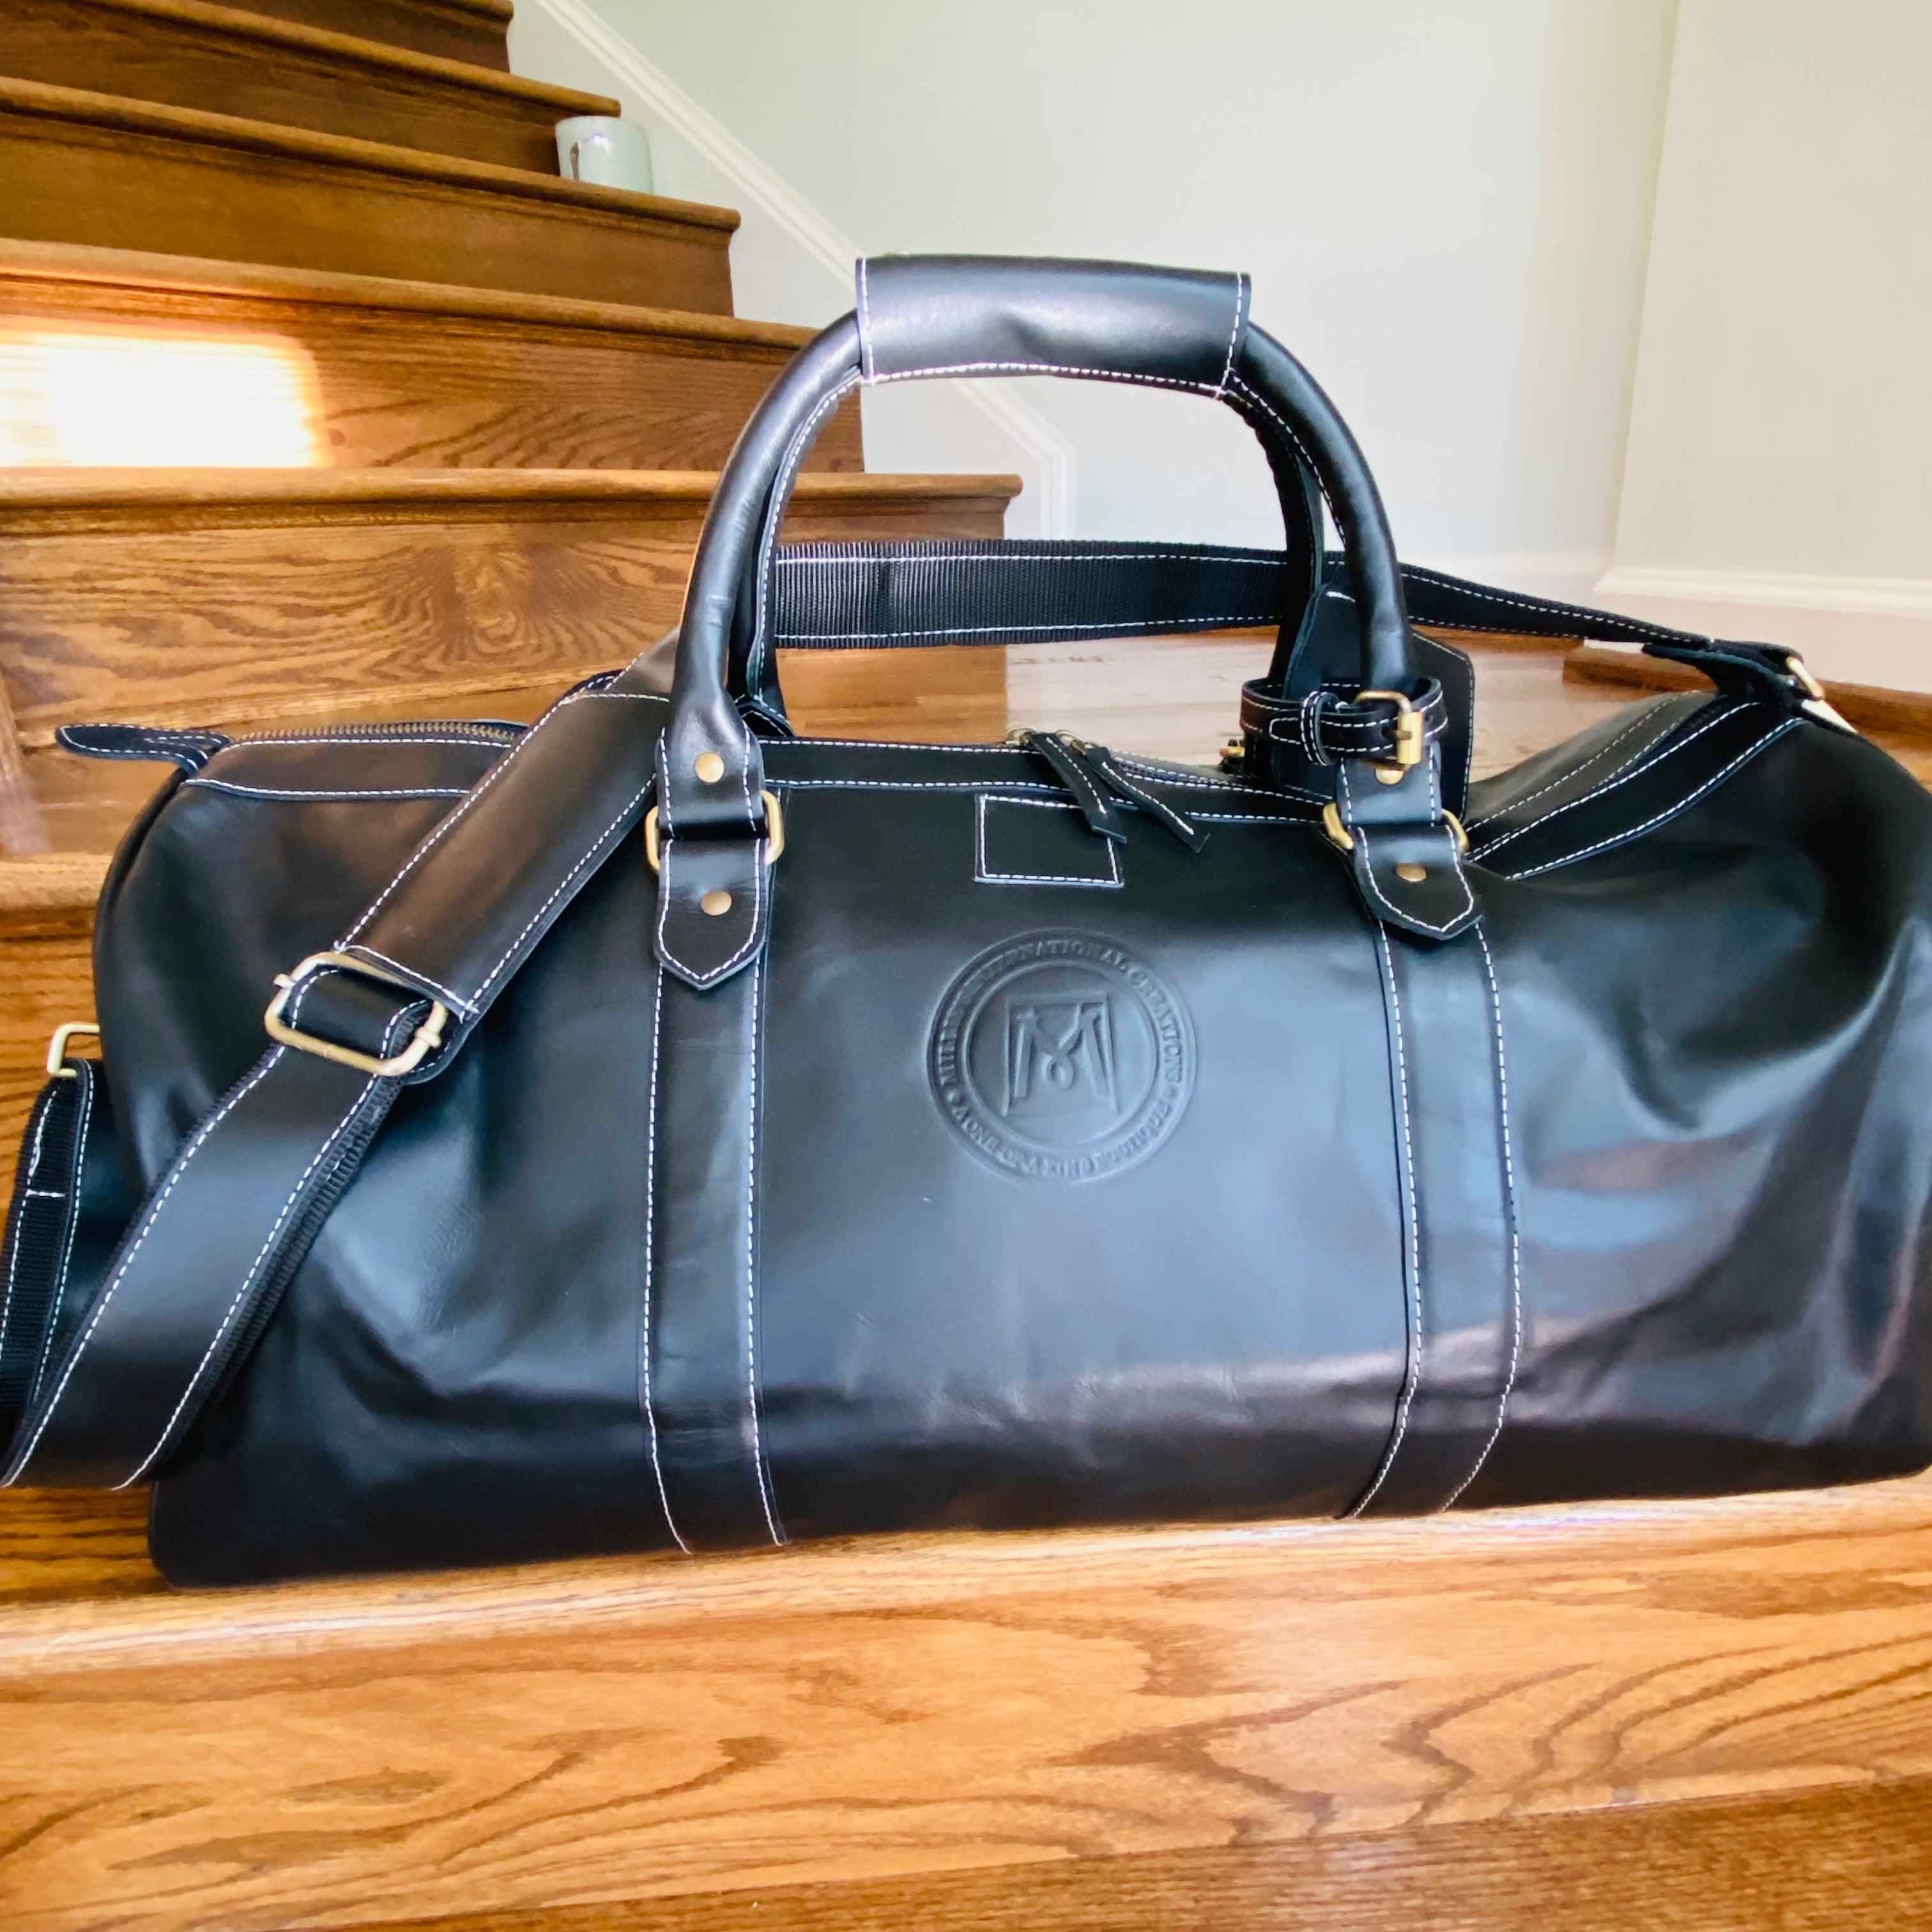 Millie’s Signature Duffel Bags